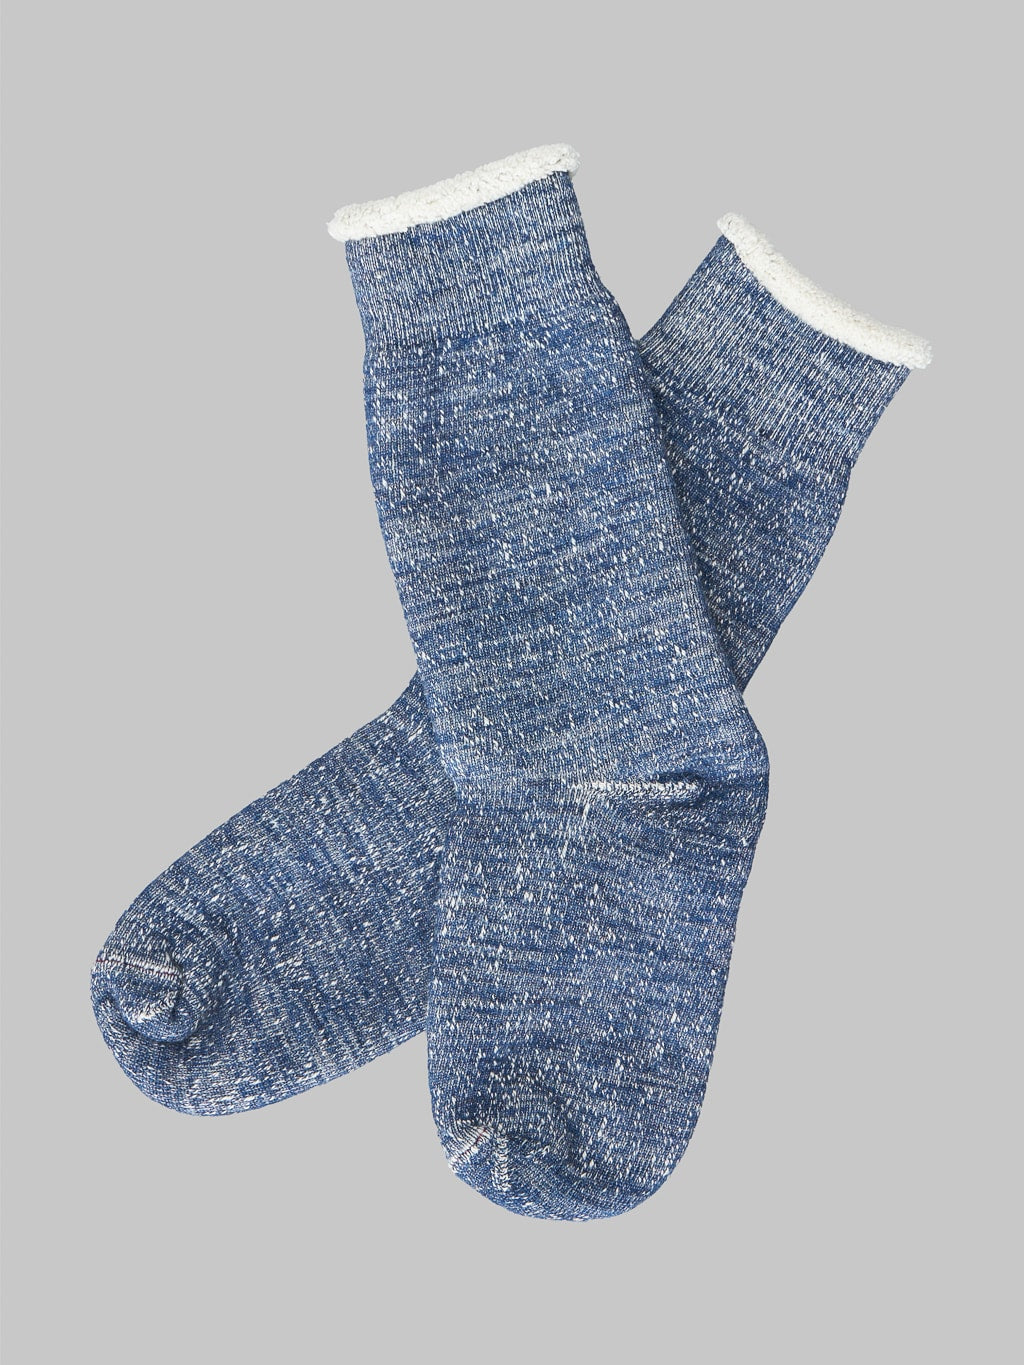 ROTOTO Double Face Crew Socks "Merino Wool & Organic Cotton" Deep Ocean